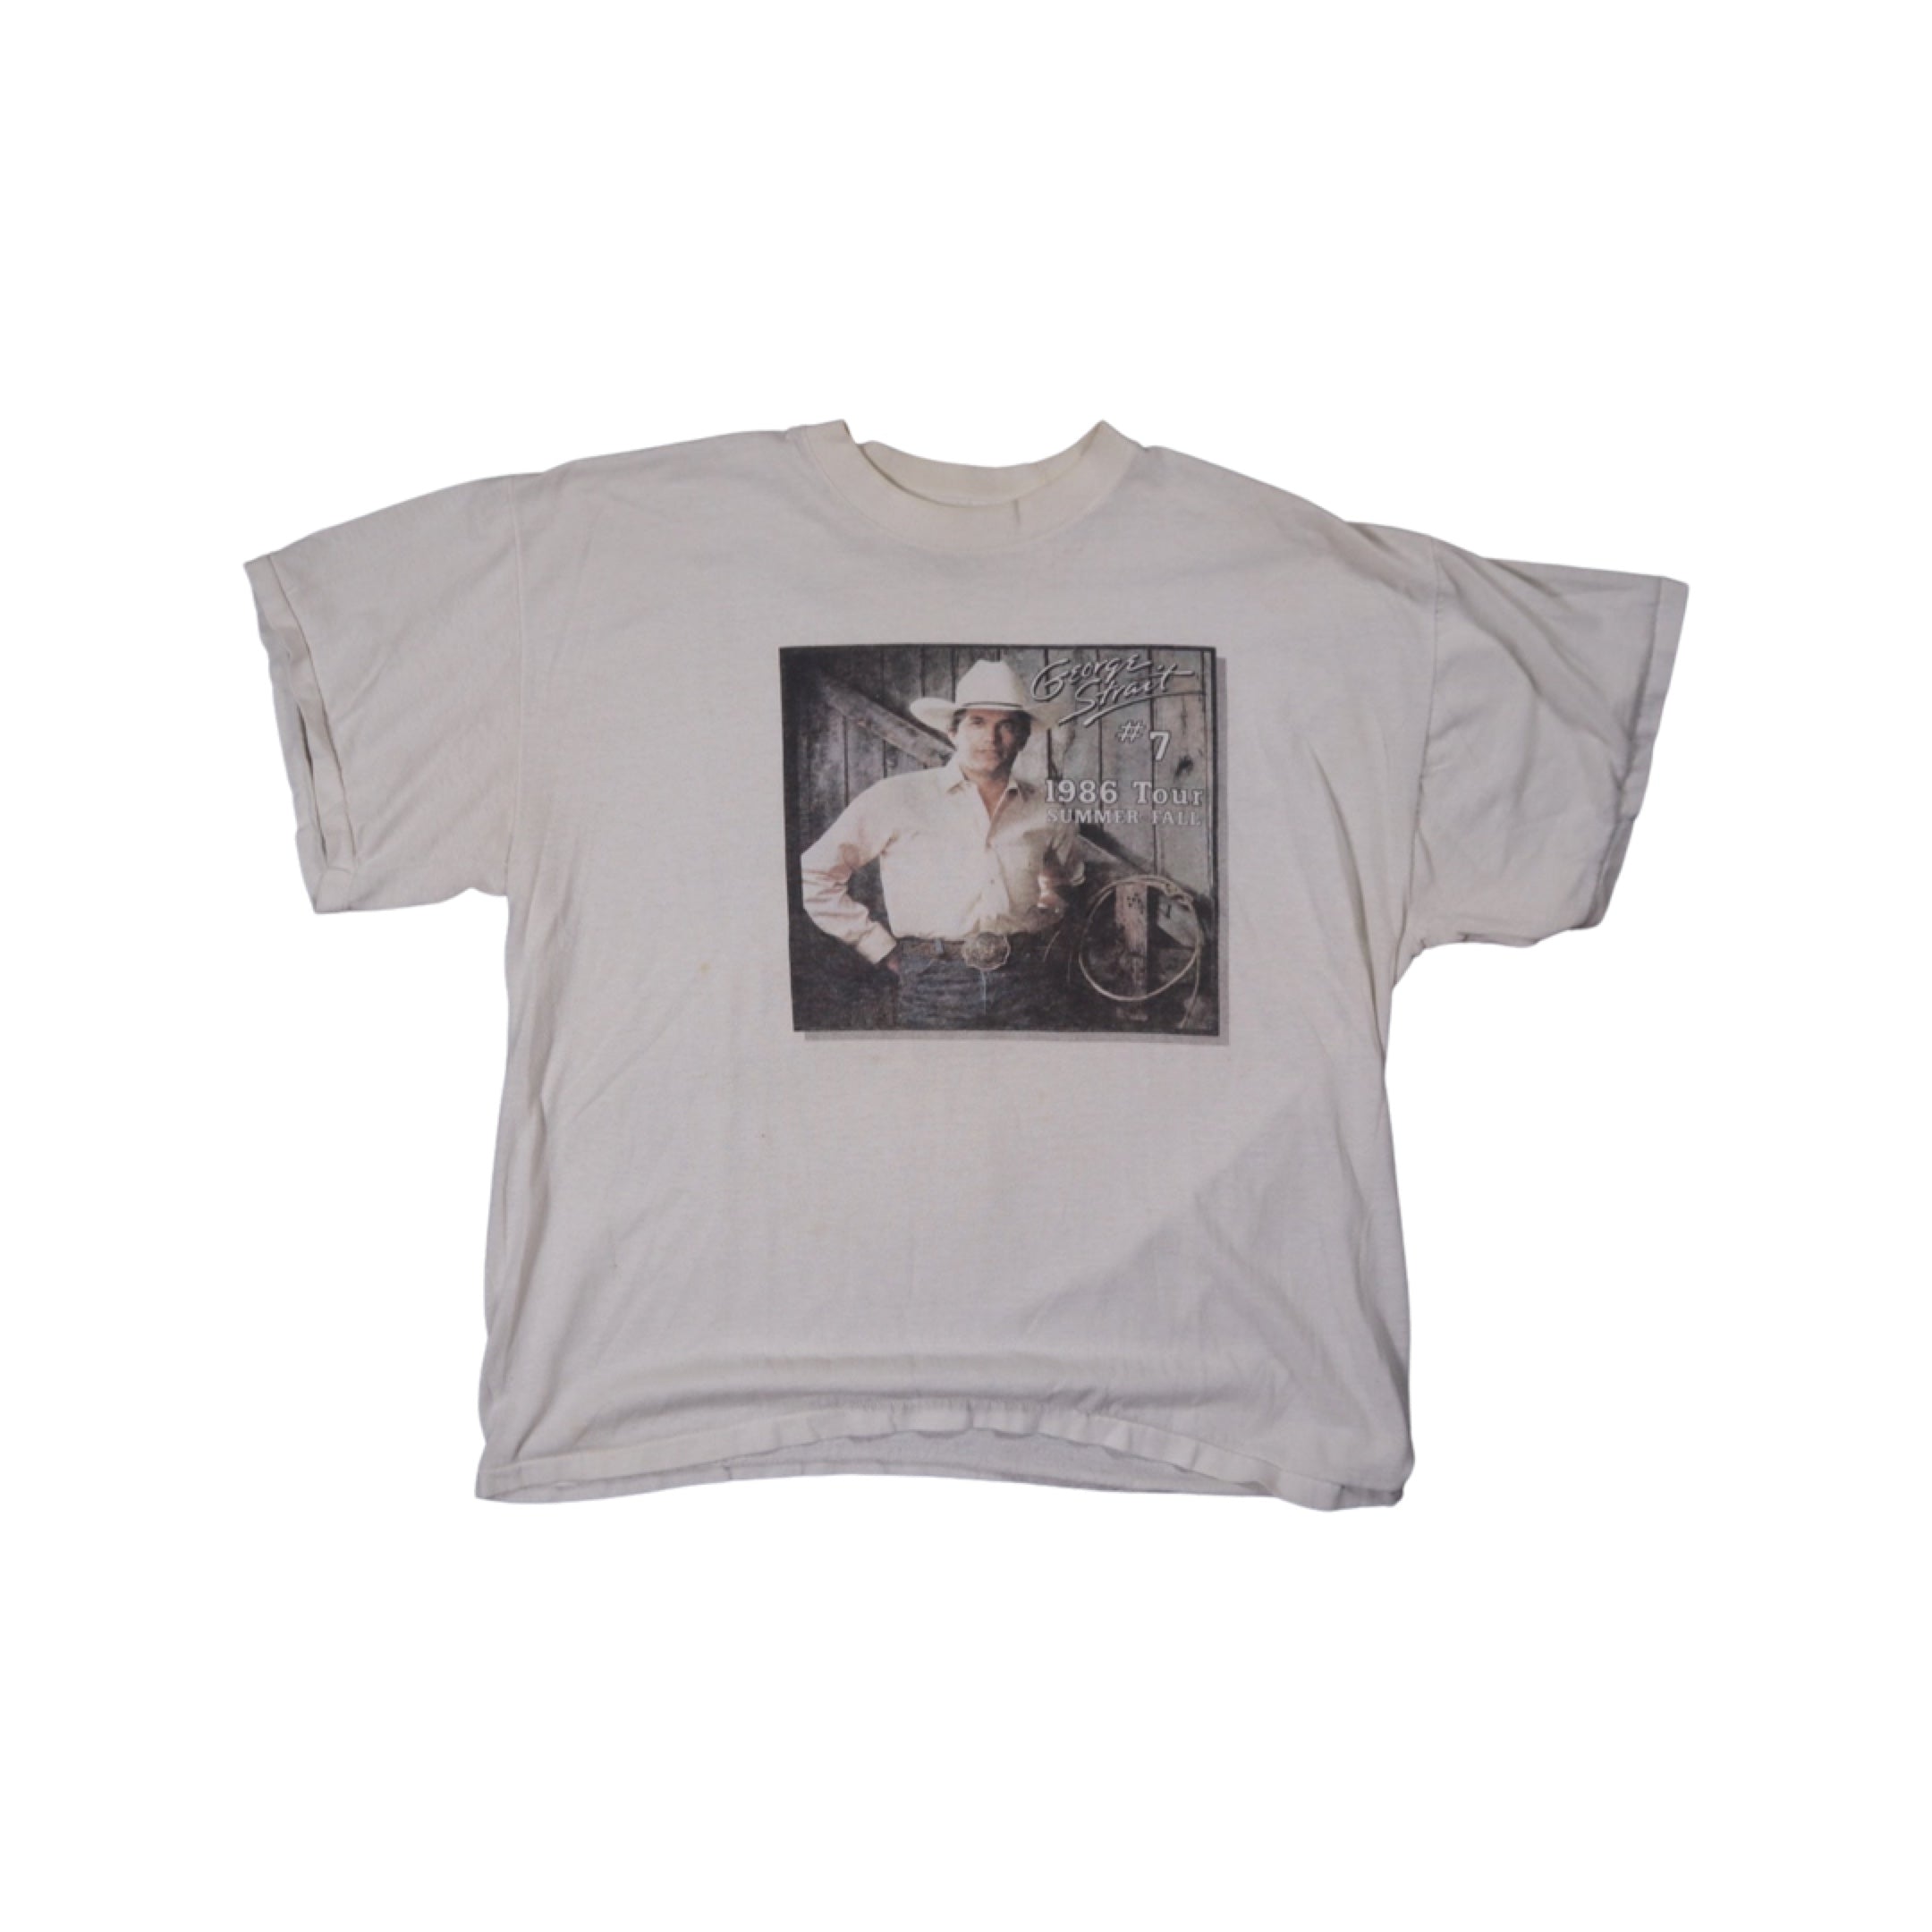 George Strait 1986 Tour T-Shirt Grail (Medium)